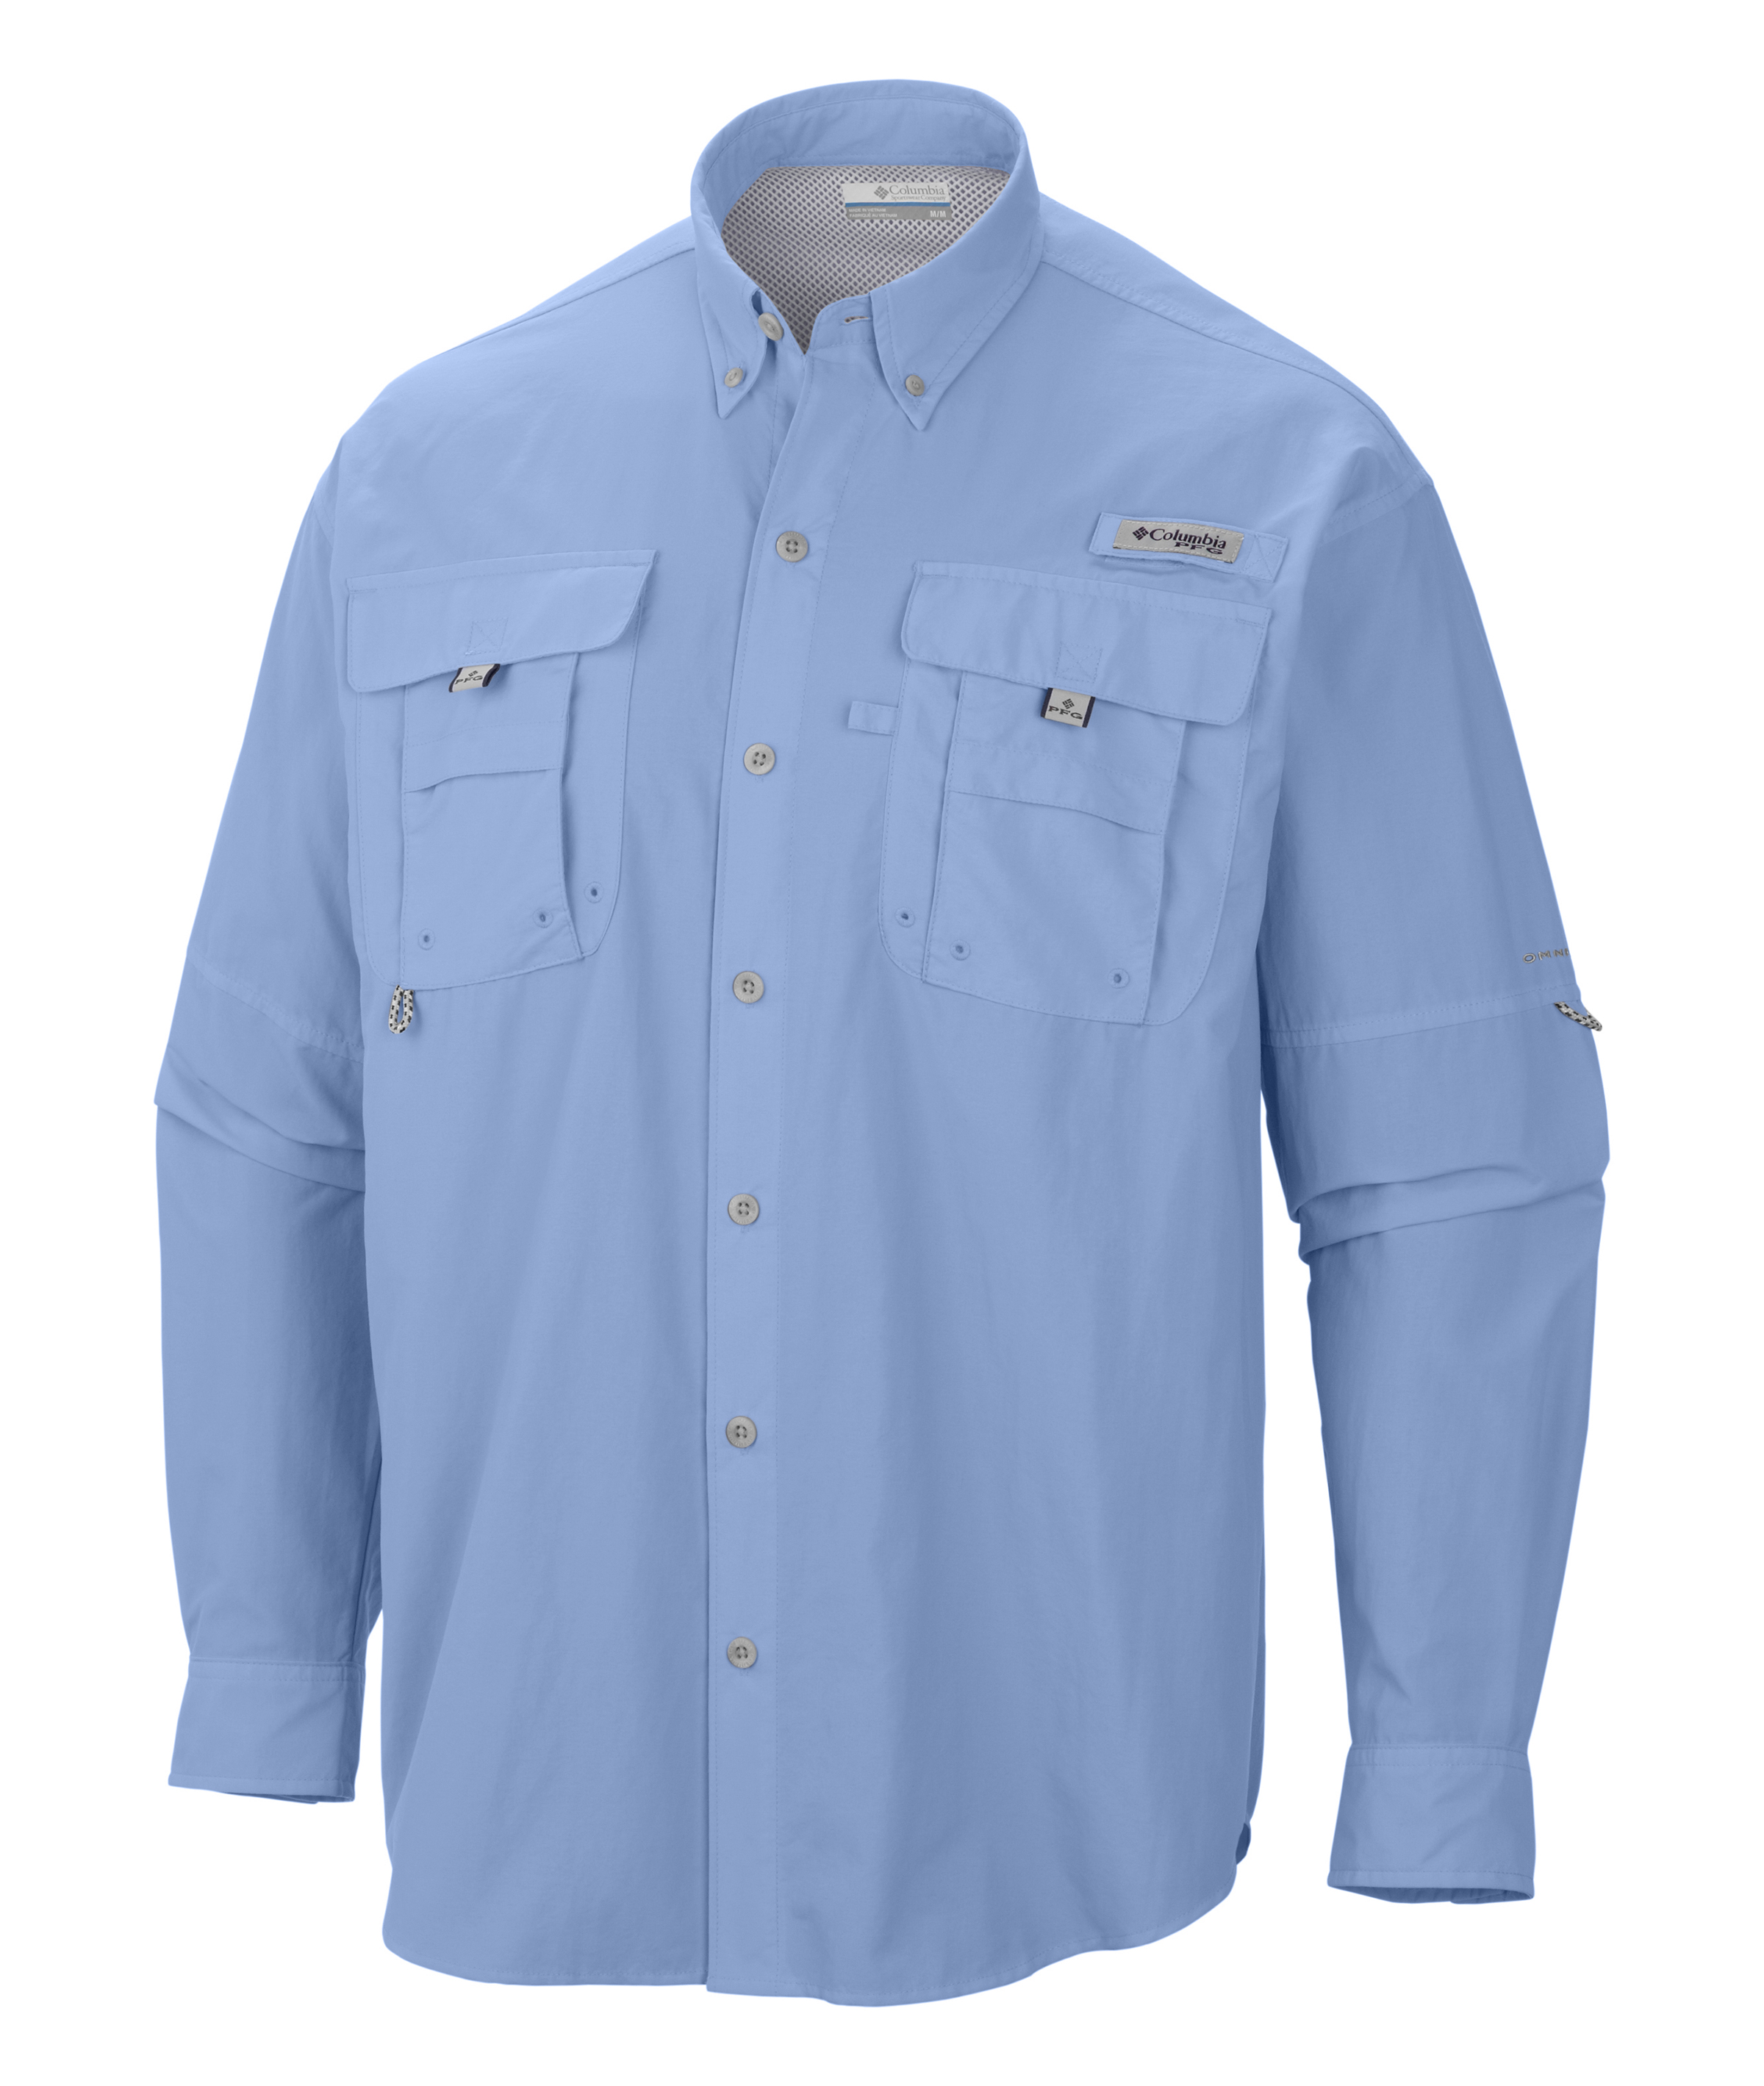 NEW COLUMBIA Men’s PFG BAHAMA II Long Sleeve Fishing Shirts XS-S-M-L-XL-2XL 